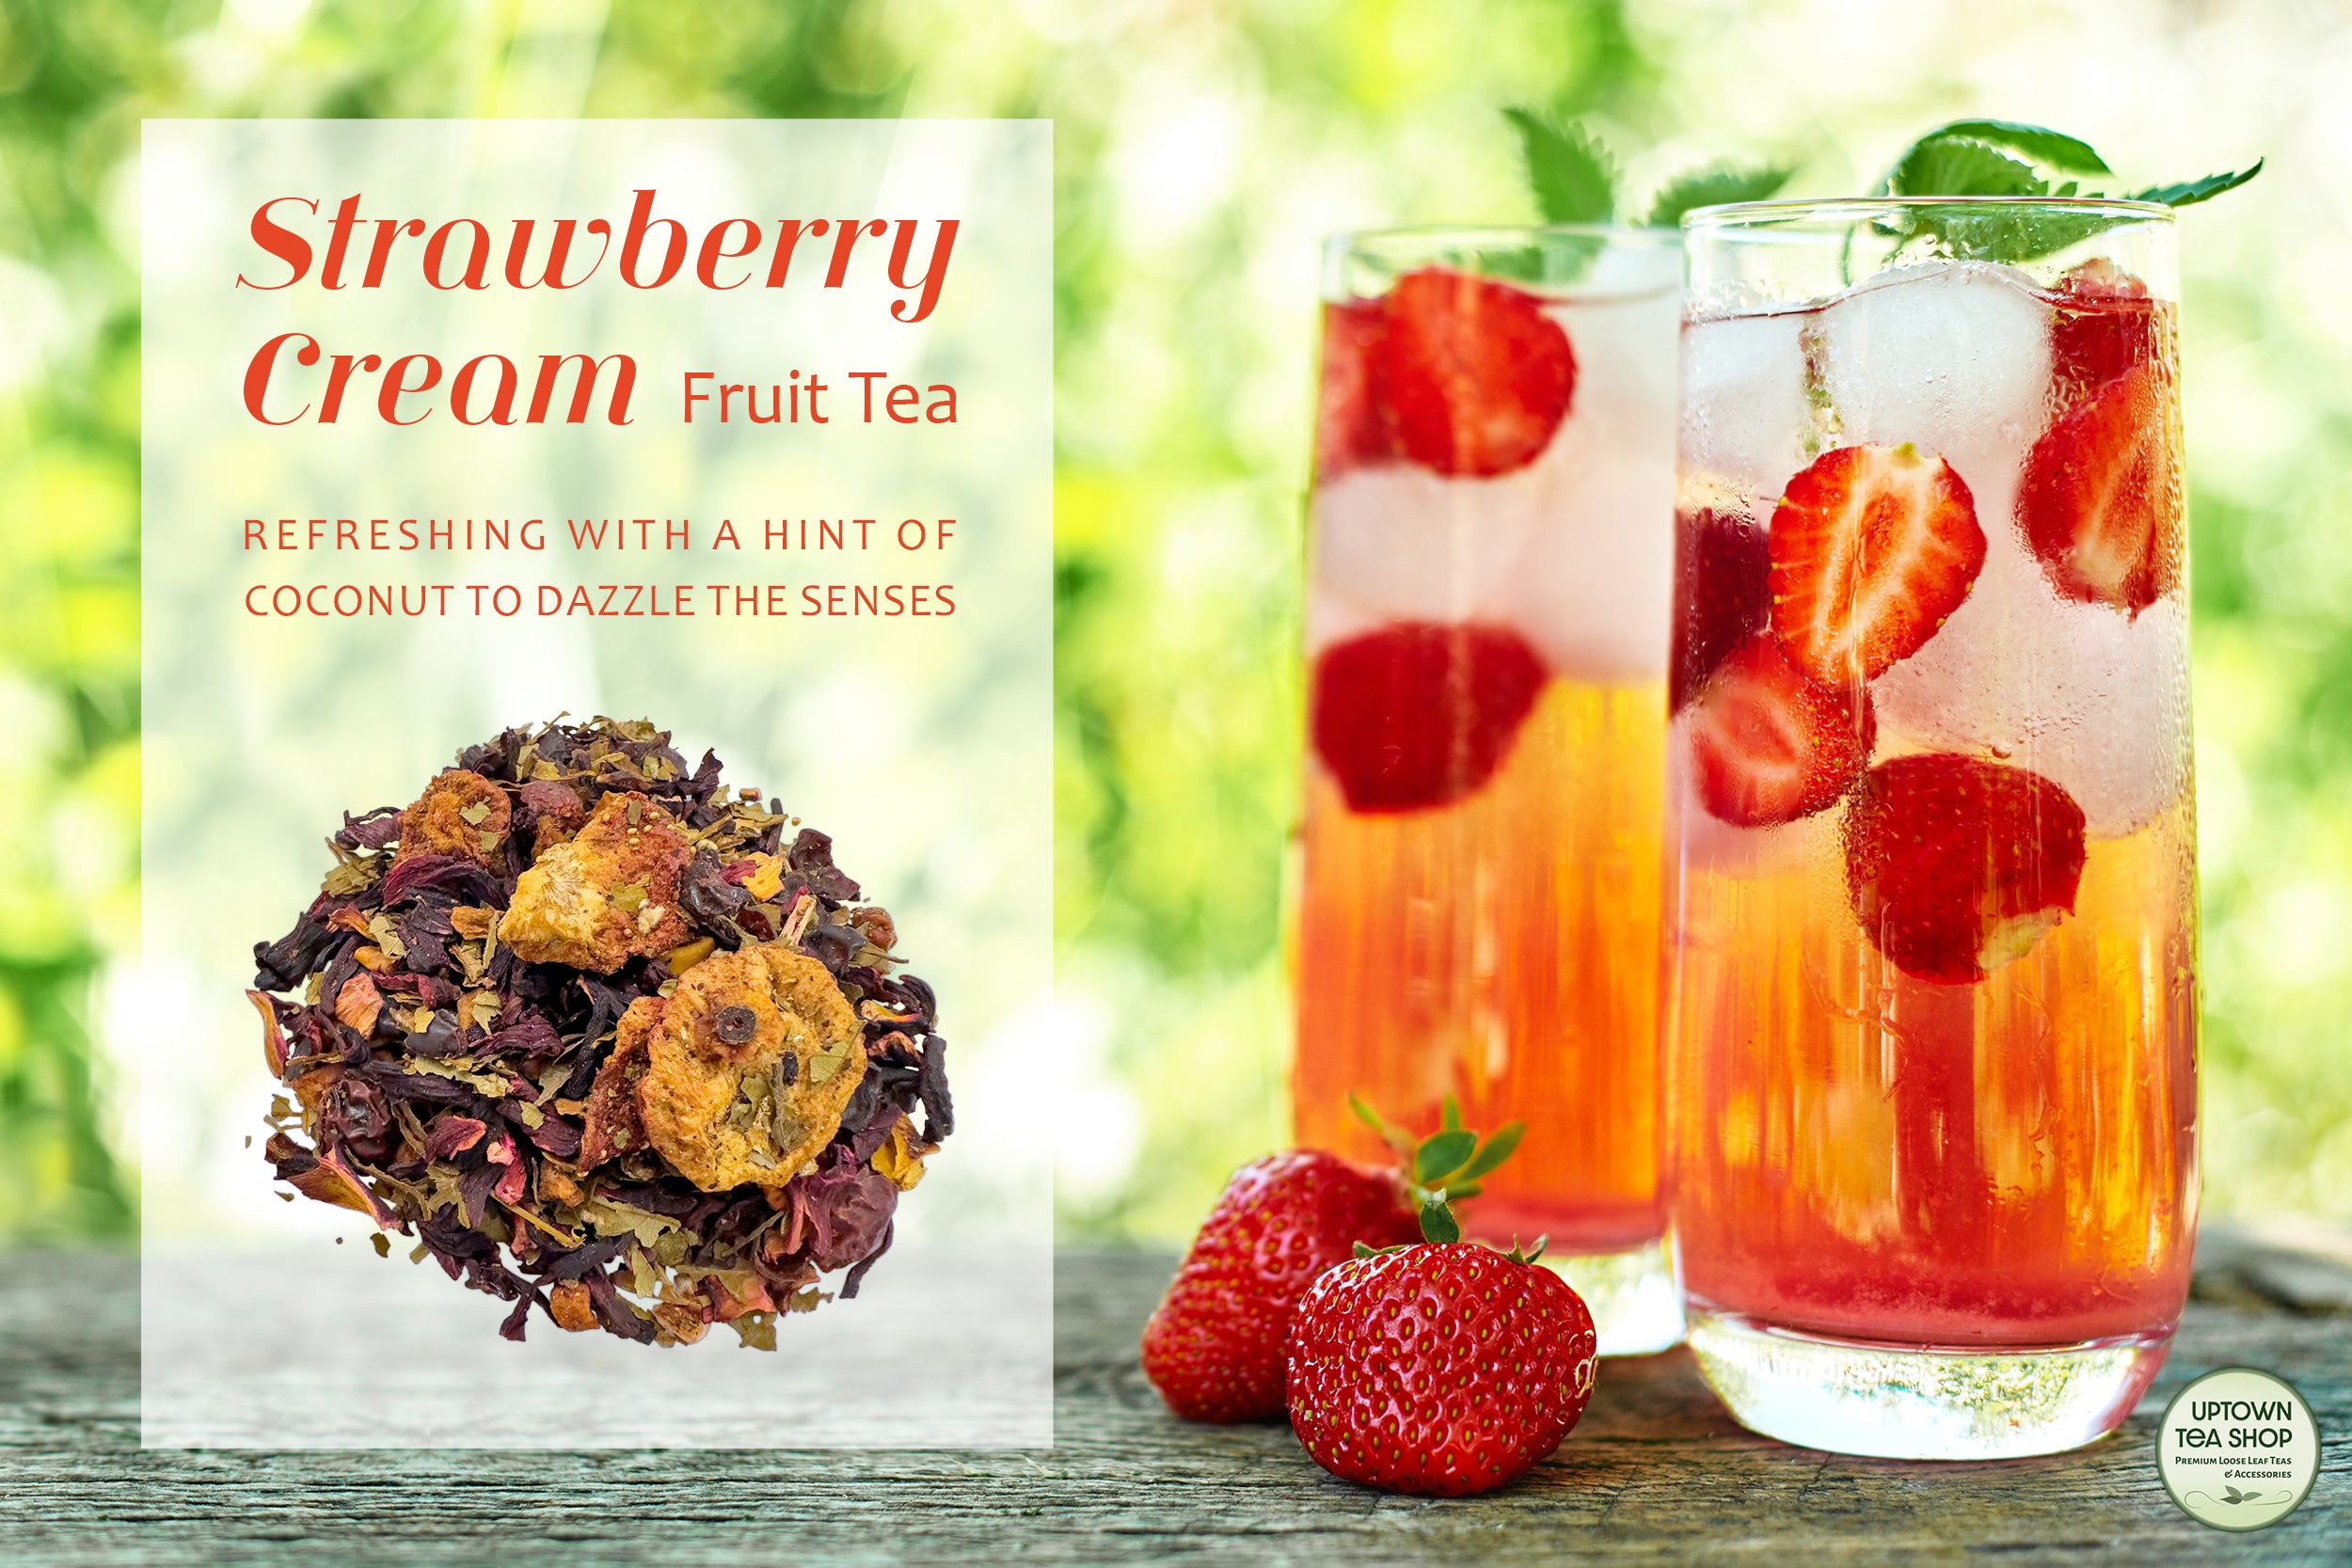 Strawberry Cream Fruit Tea